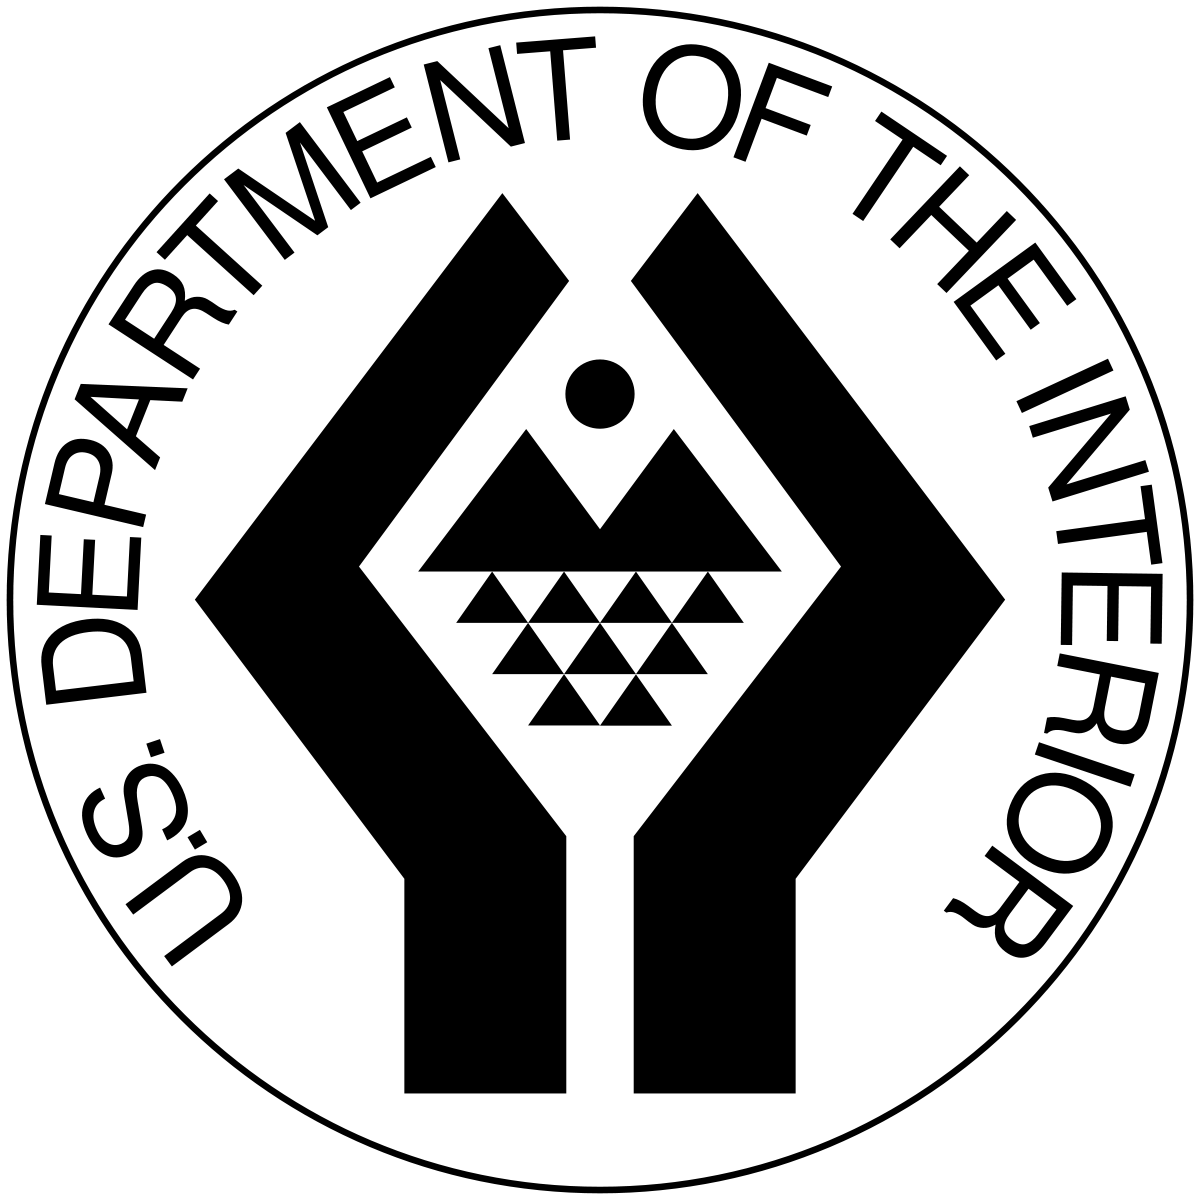 departments logo